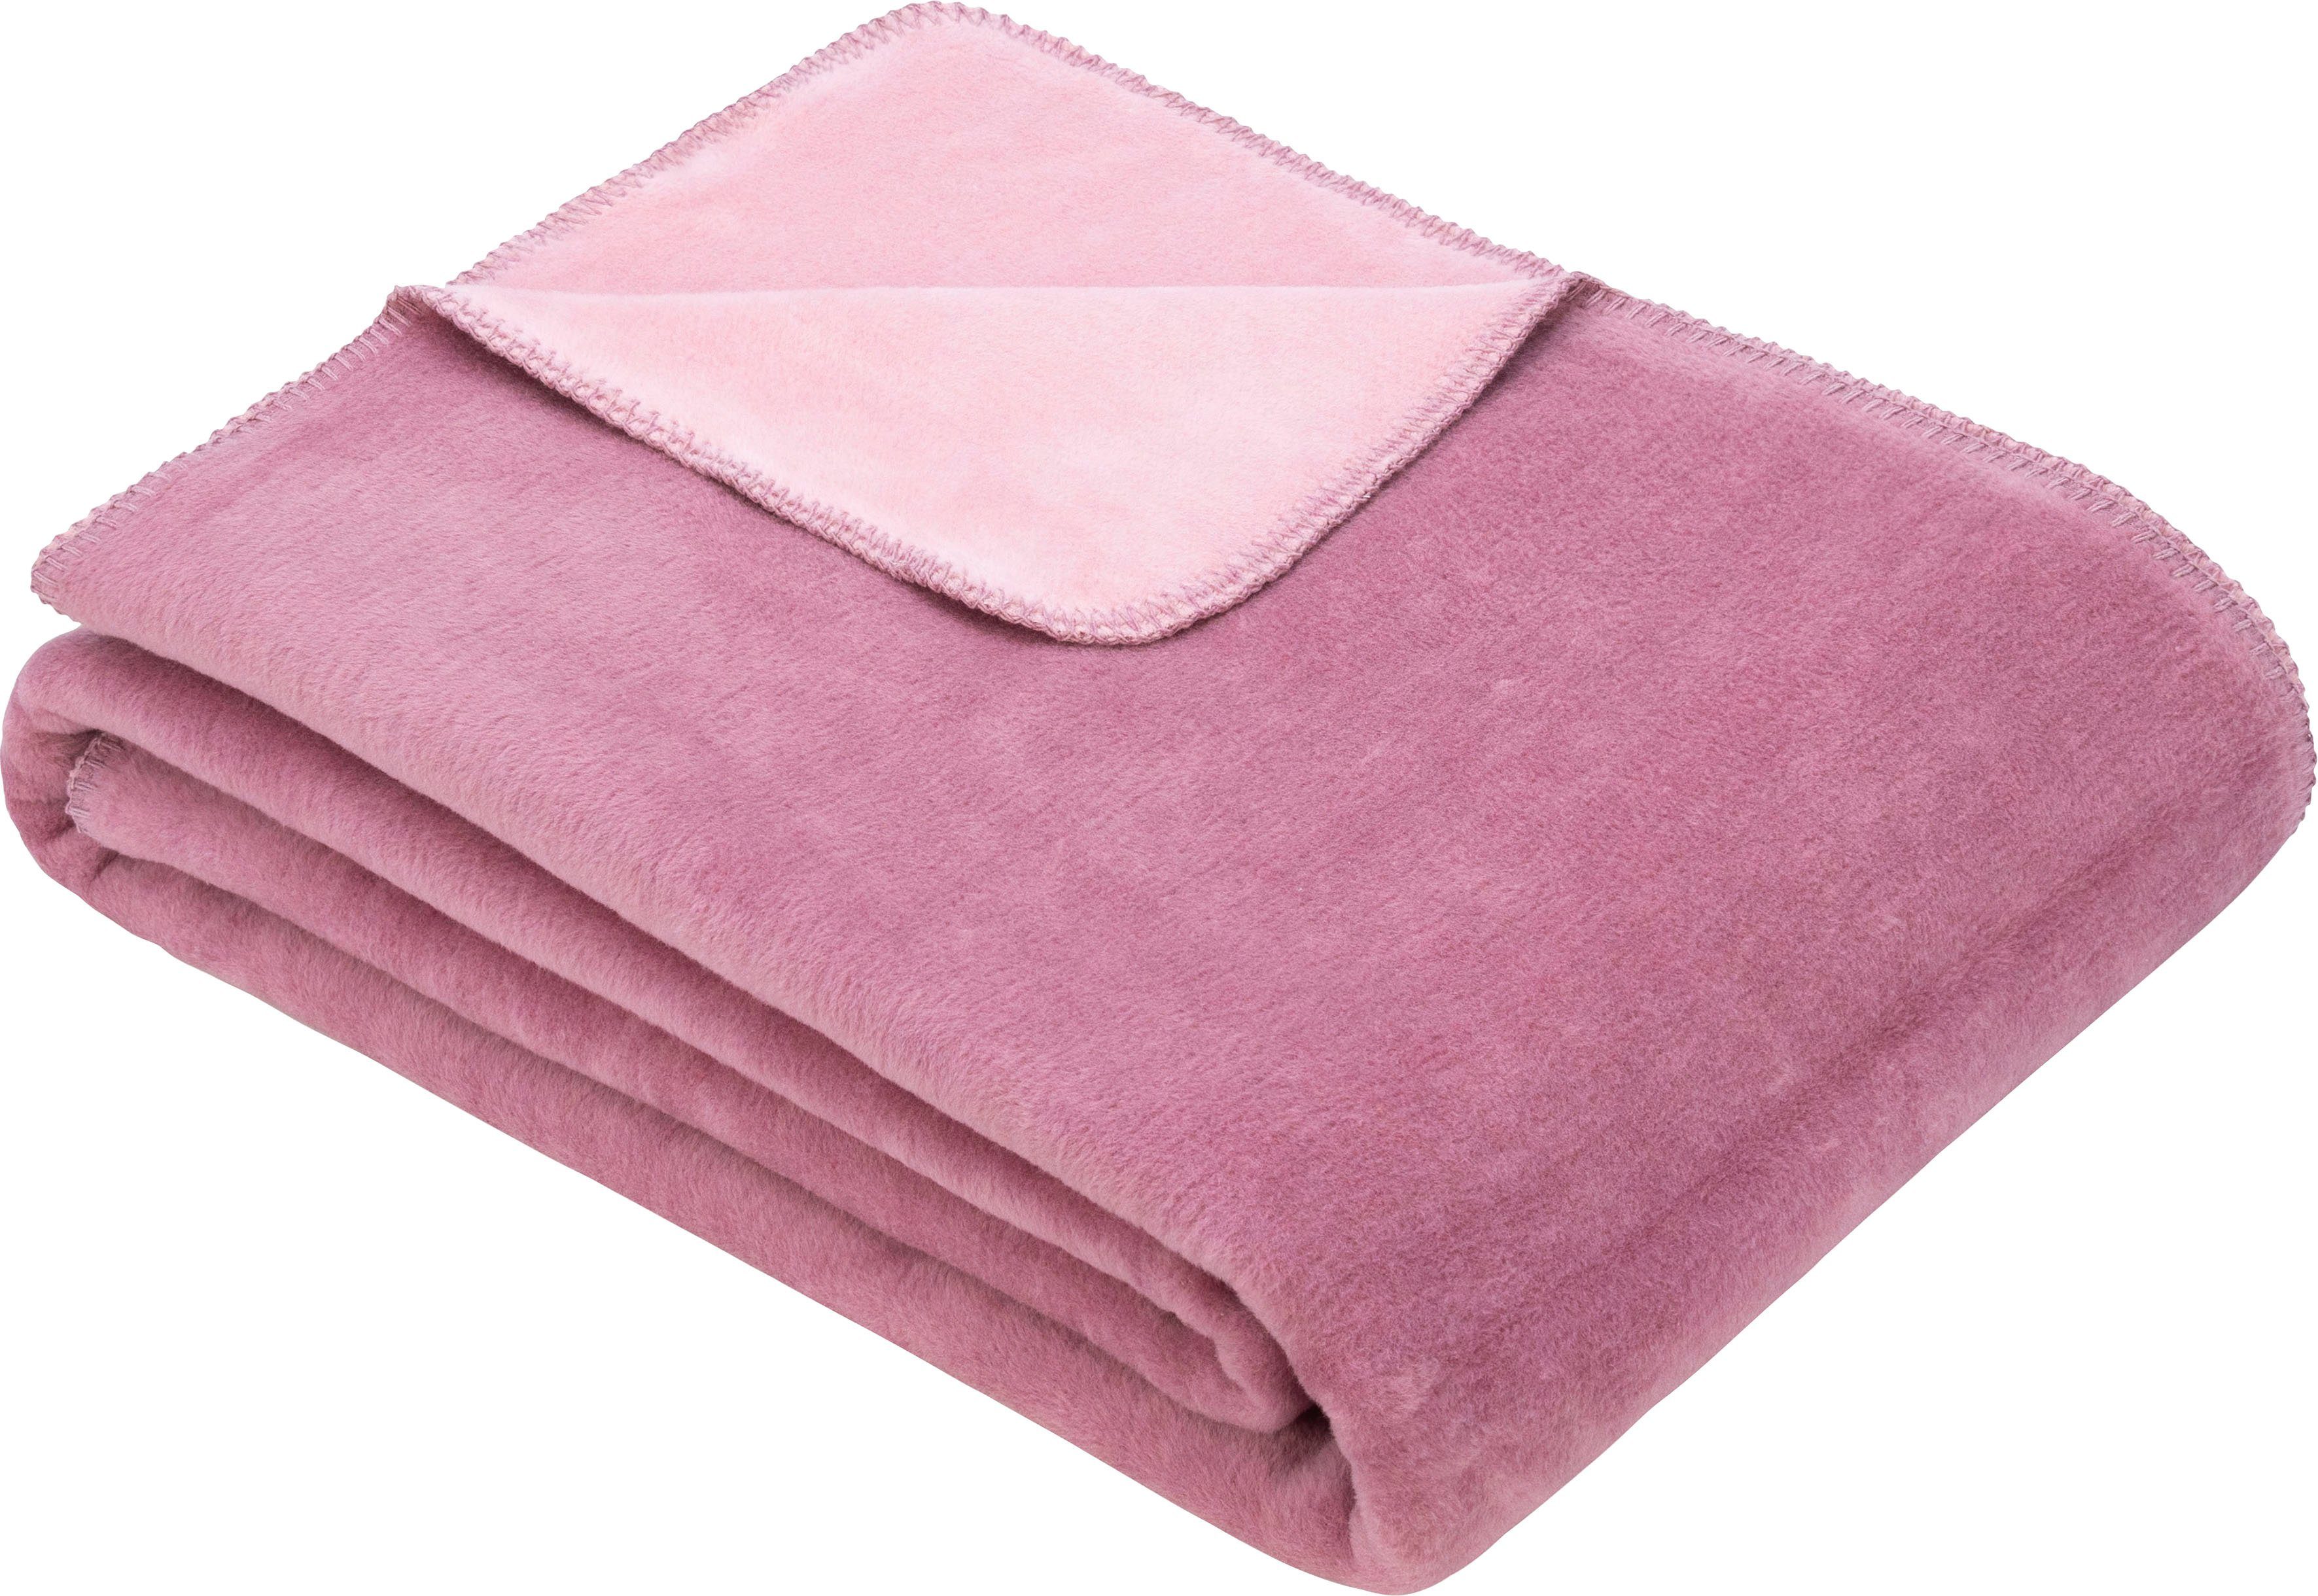 Wohndecke Jacquard Decke Dublin, IBENA, in trendigen Pastellfarben rosa/dunkelrosa